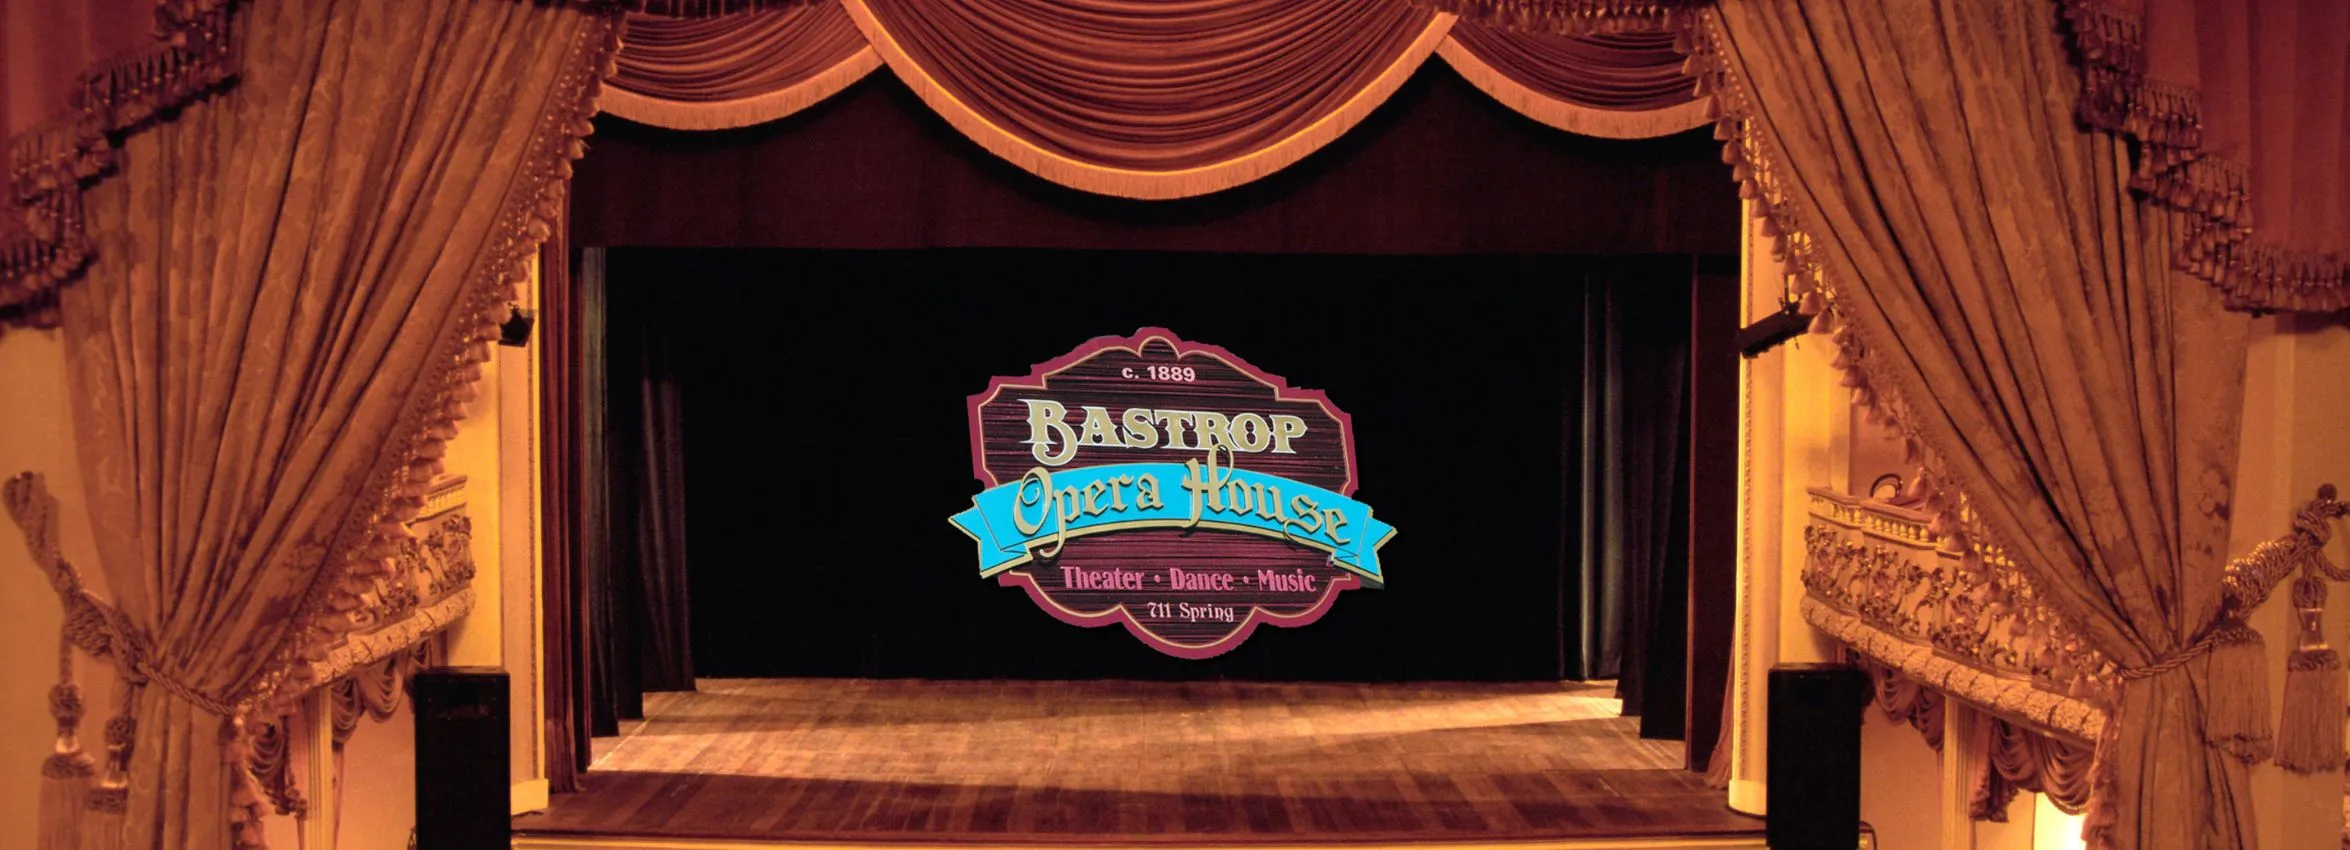 Bastrop-Opera-House_Desktop_ET